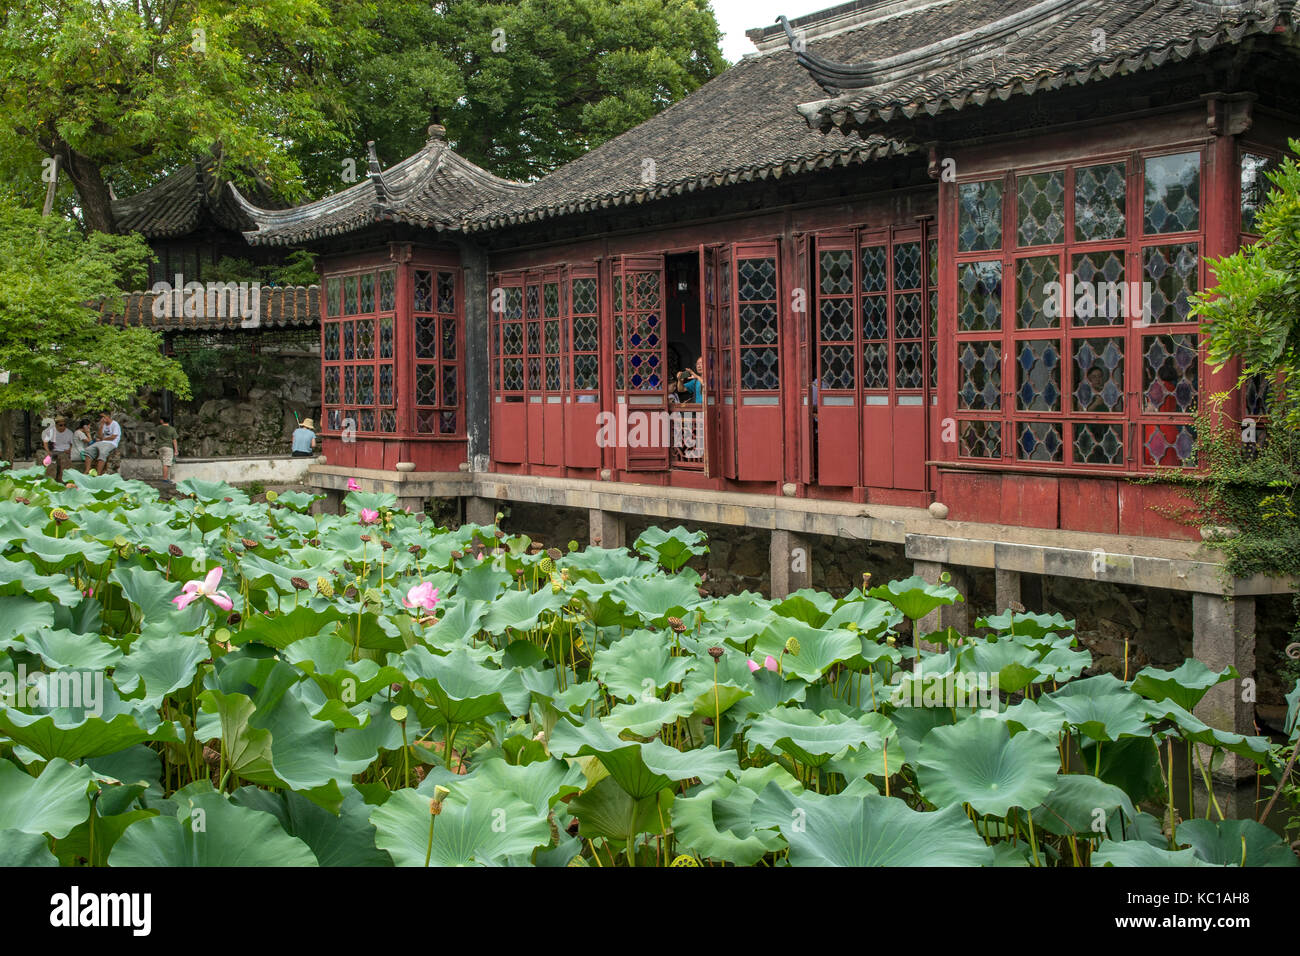 Hall di eleganza, umile administrator's garden, Suzhou, Cina Foto Stock